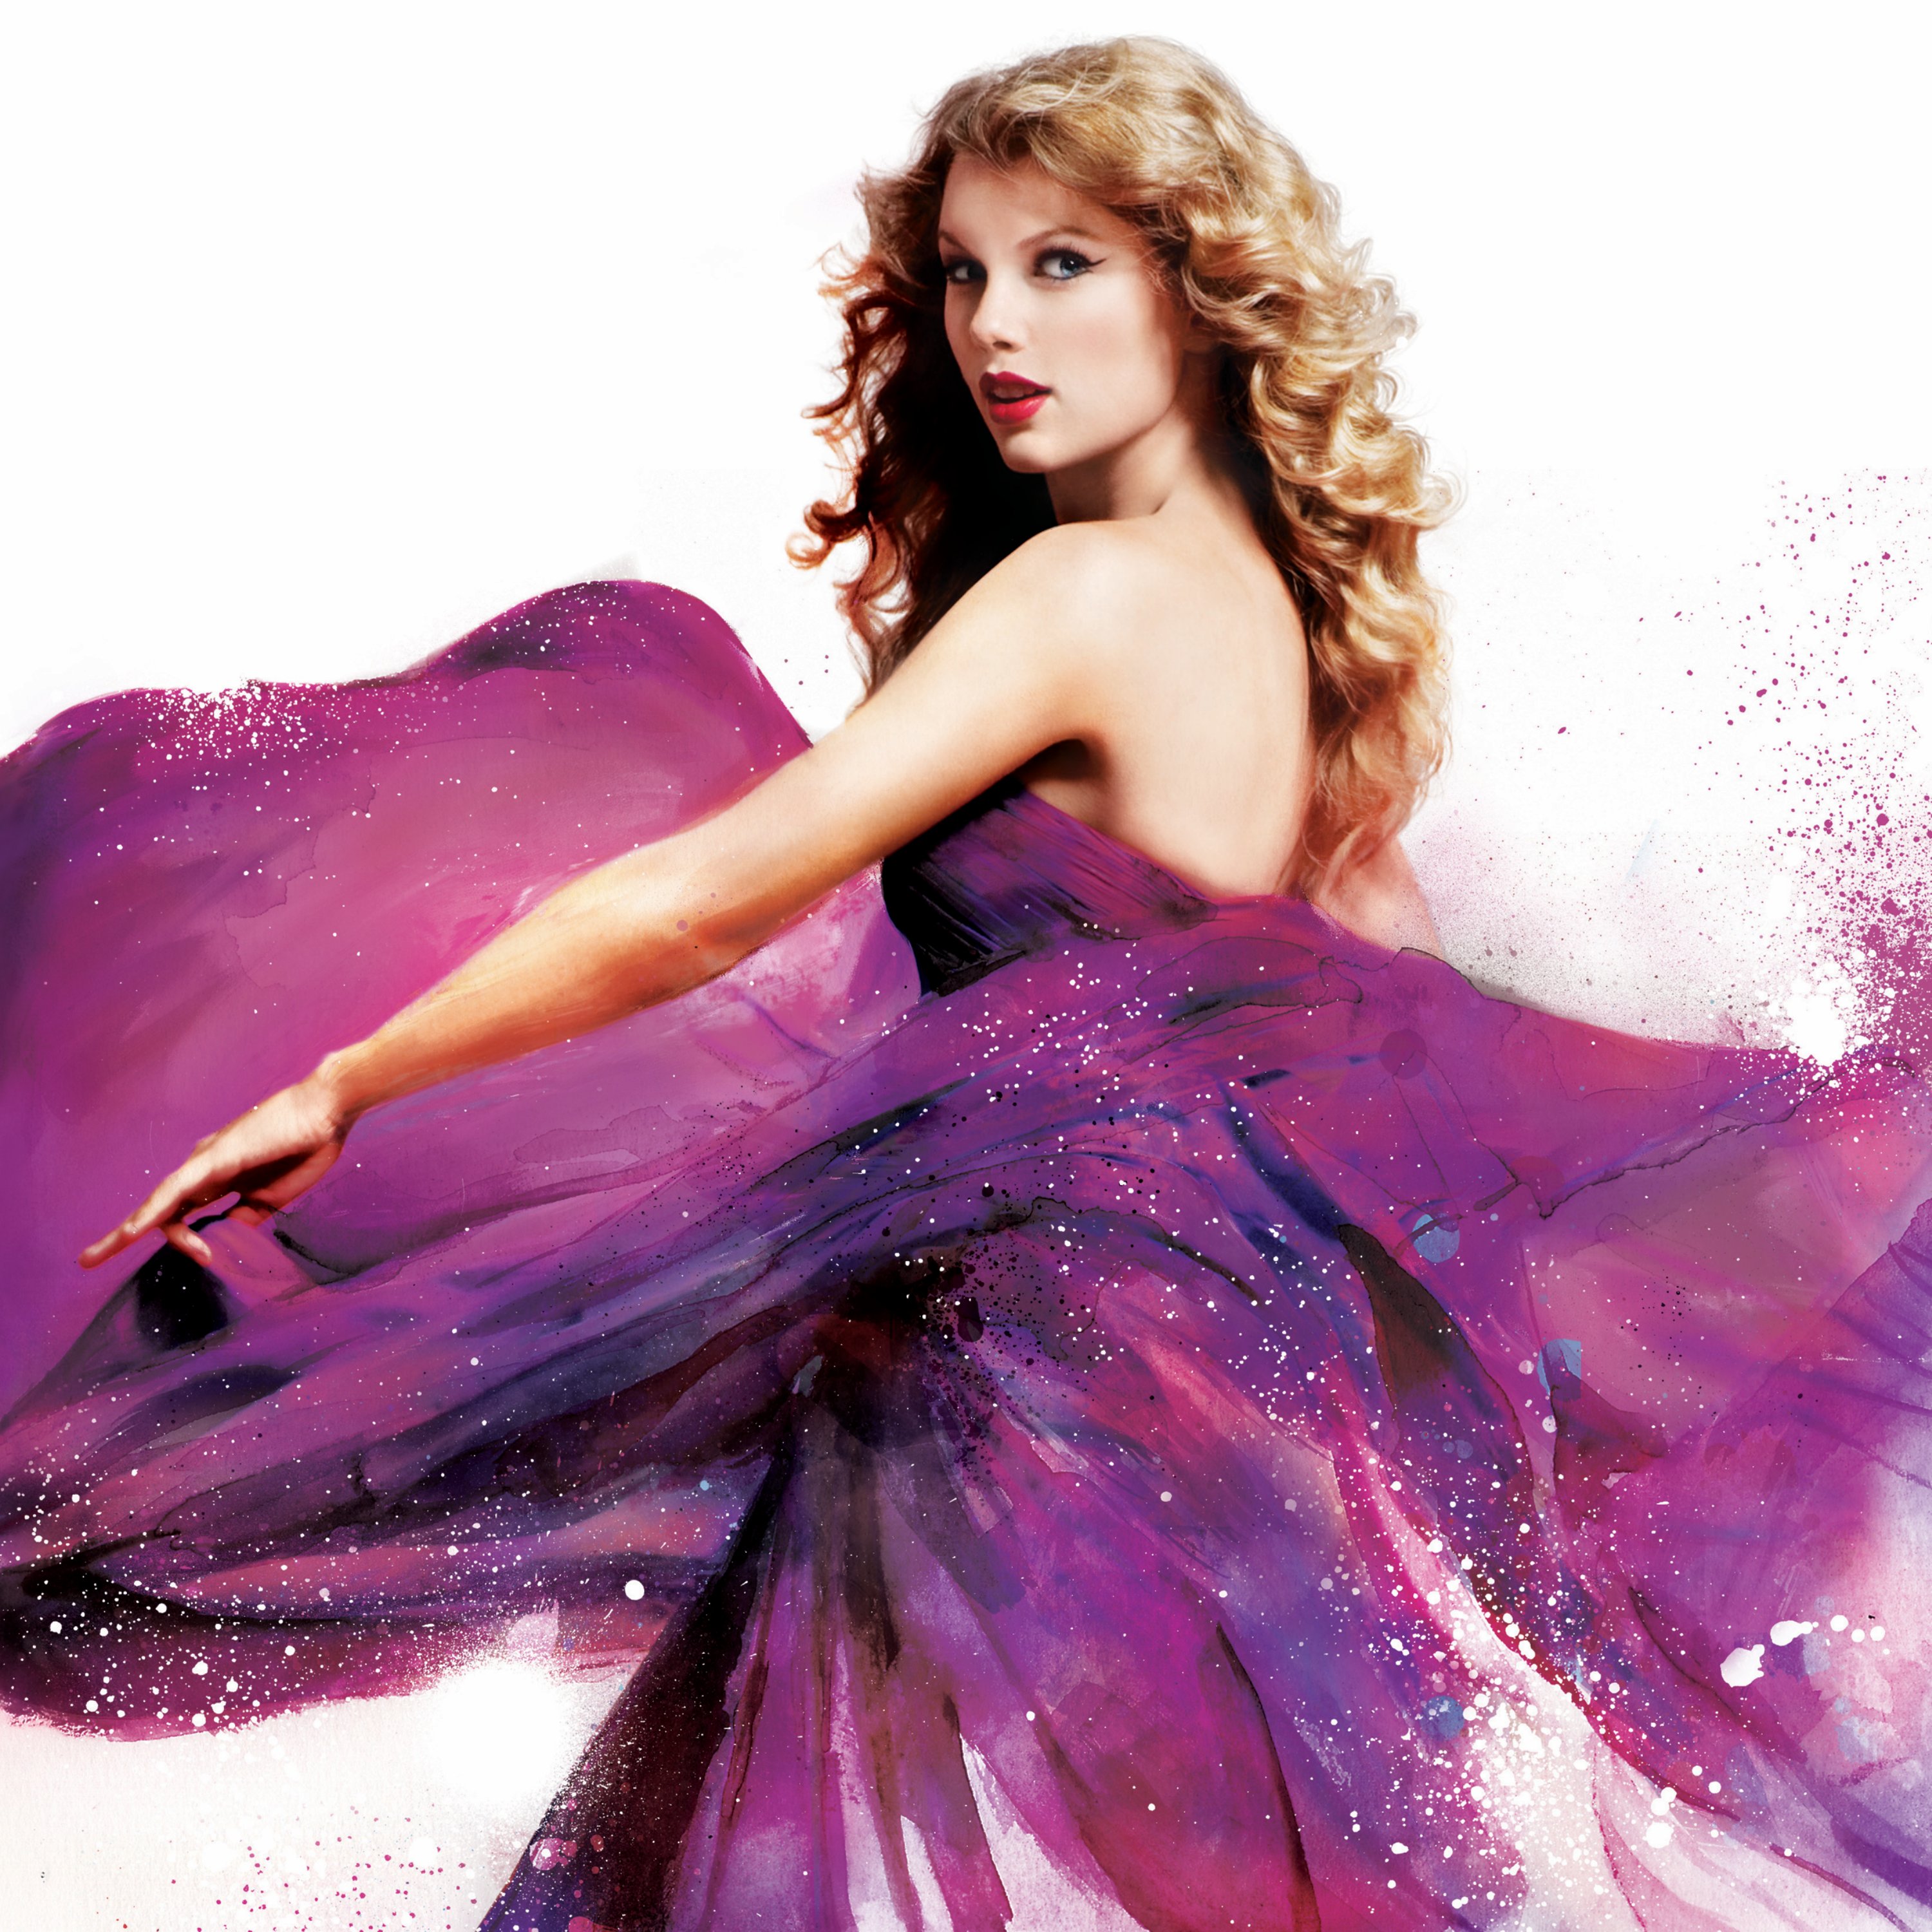 Taylor Swift 013273 Speak Now promos 2010